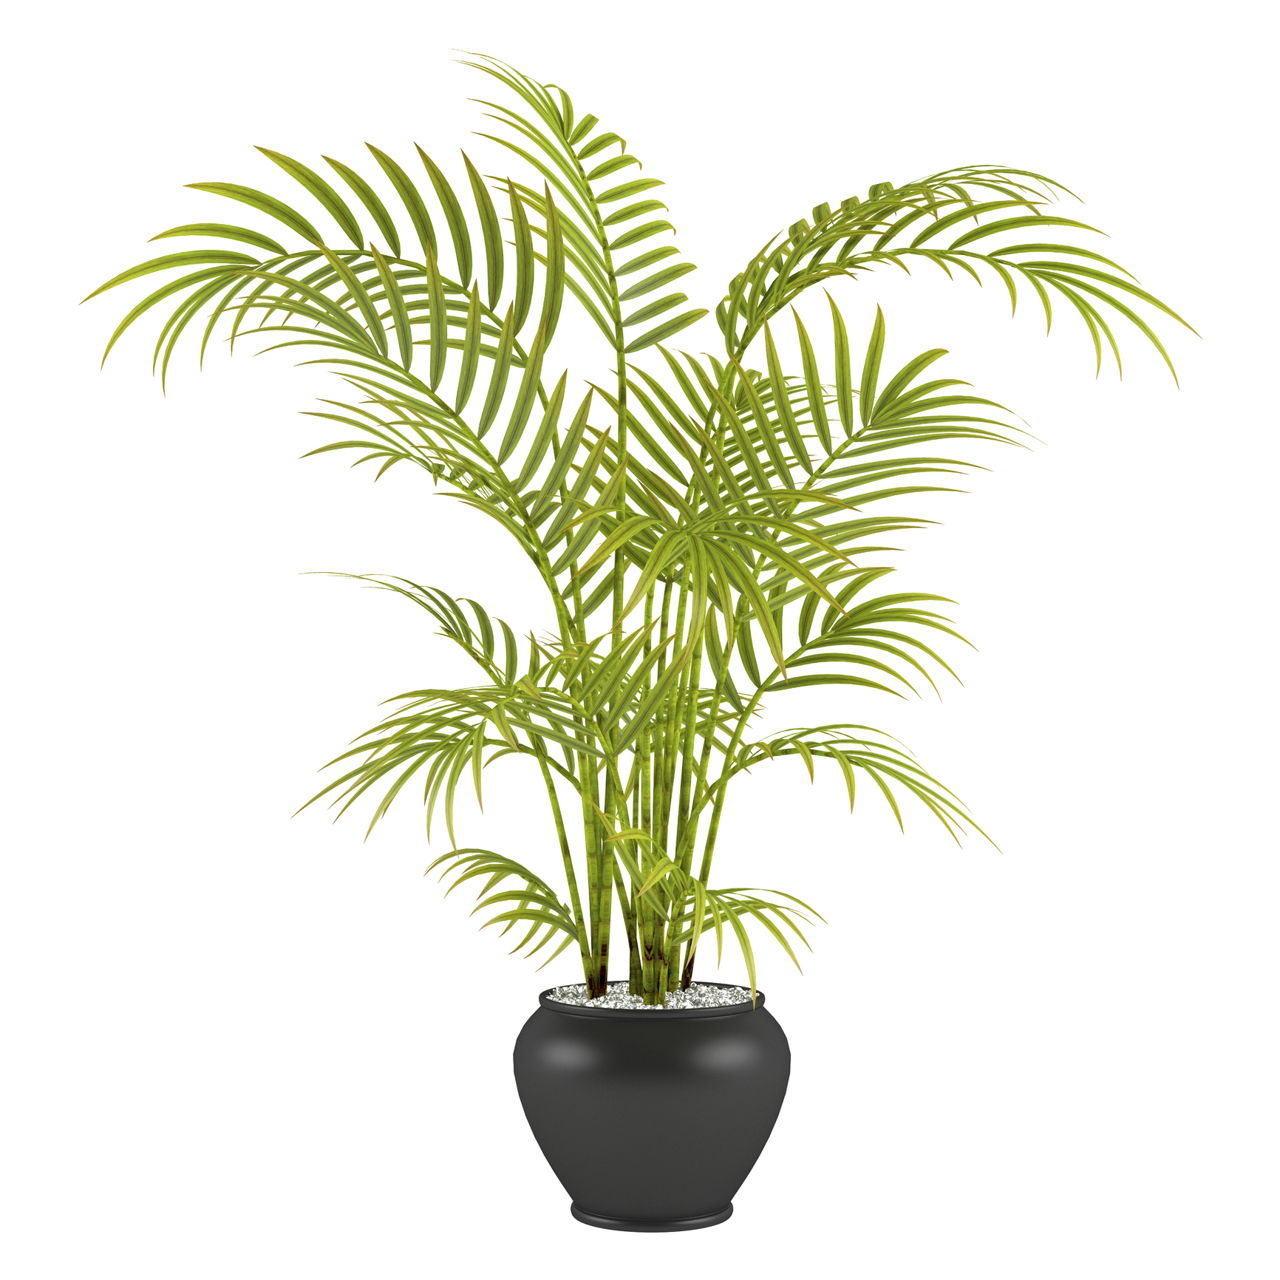 Homemade Palm Tree Fertilizer - Gardenerdy